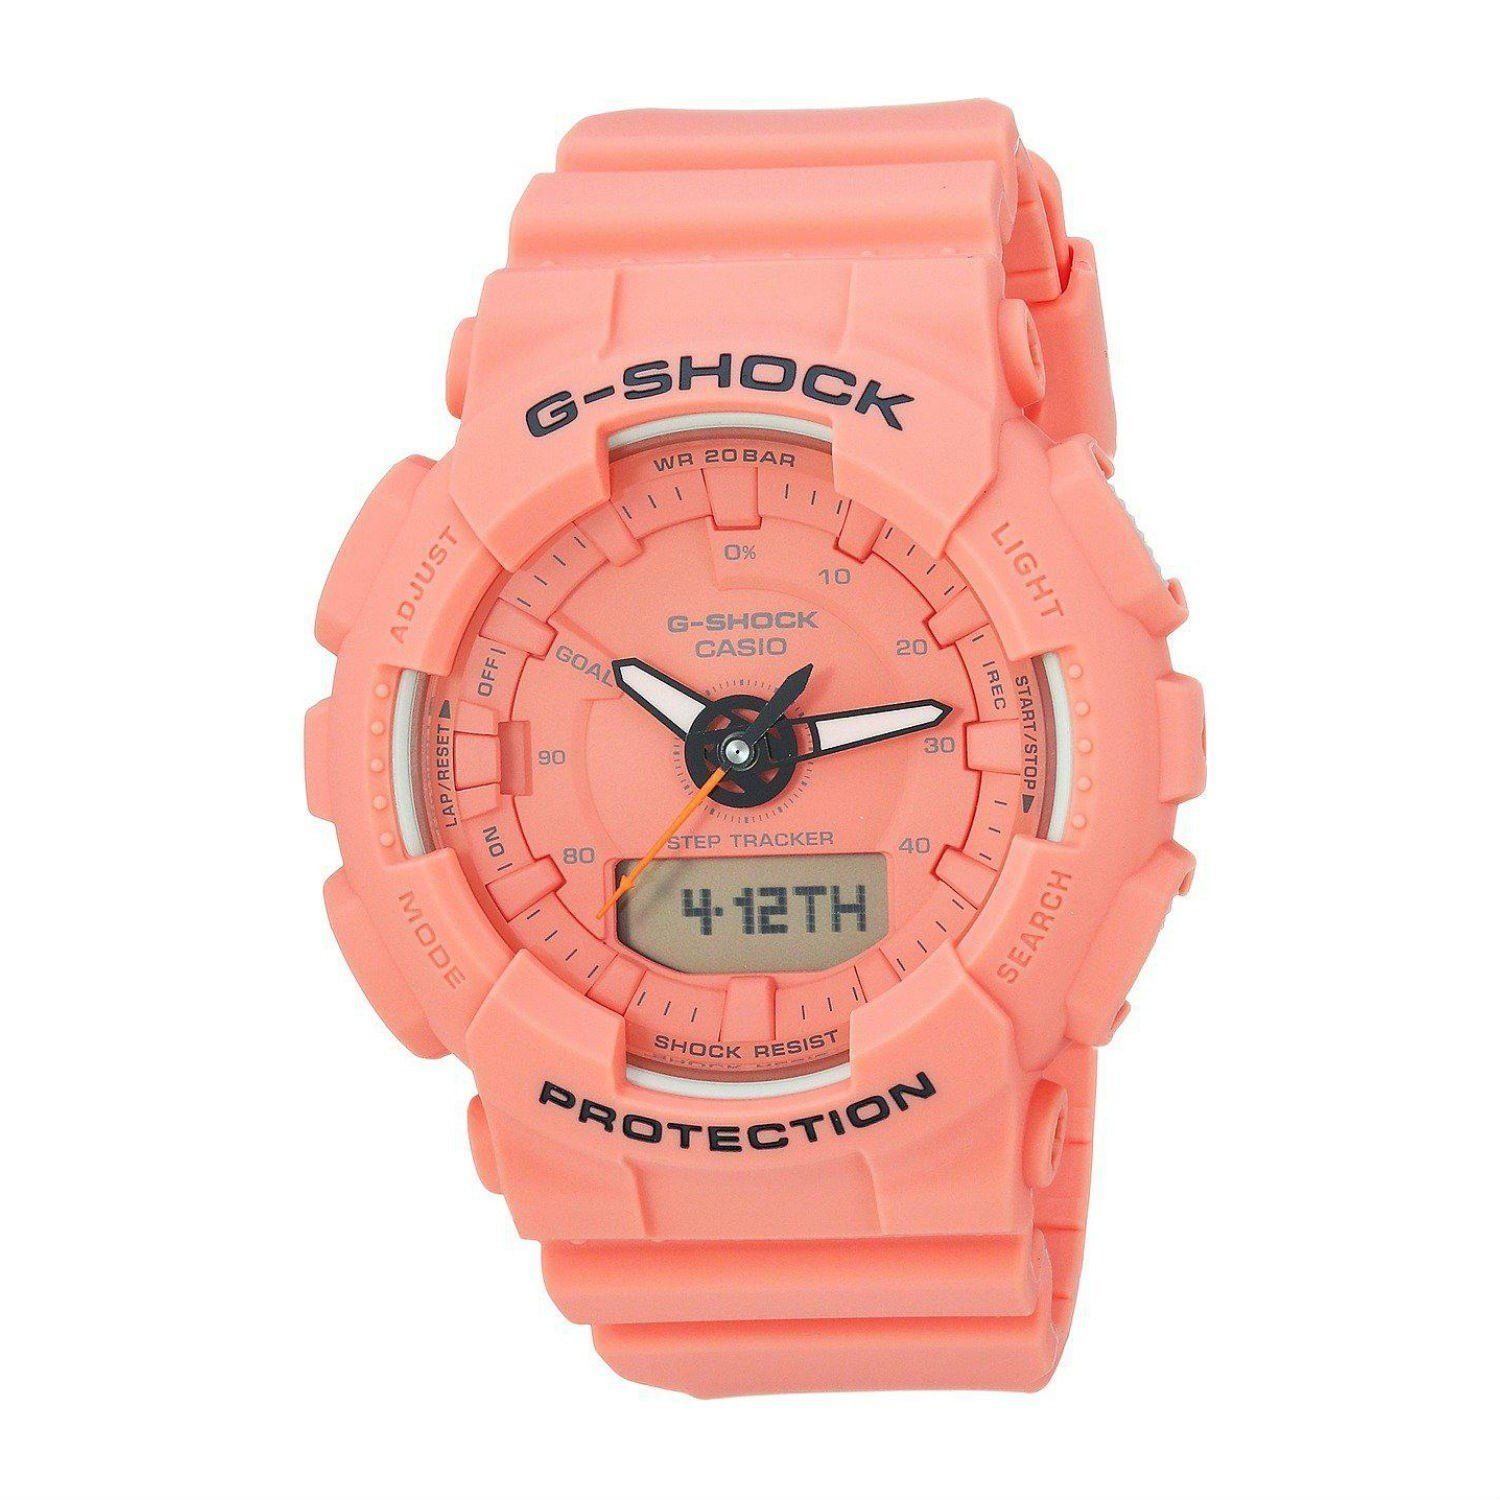 Casio: G Shock Watch
Name: Ad Step Tracker
Resin Orange